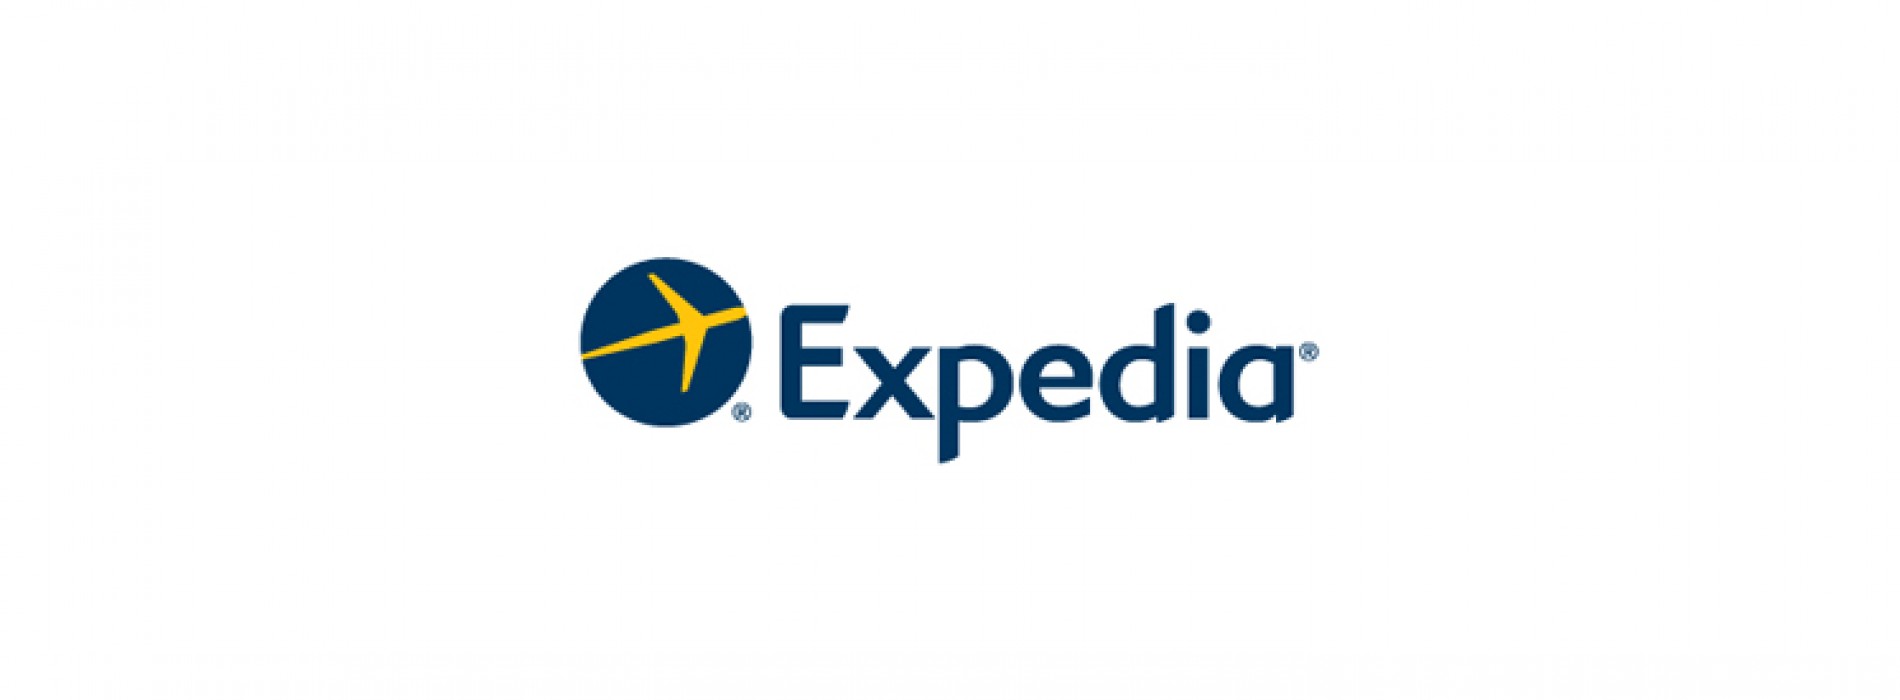 Expedia India Launches Loyalty Program: Expedia+Expedia India Launches Loyalty Program: Expedia+ - TnHGlobal